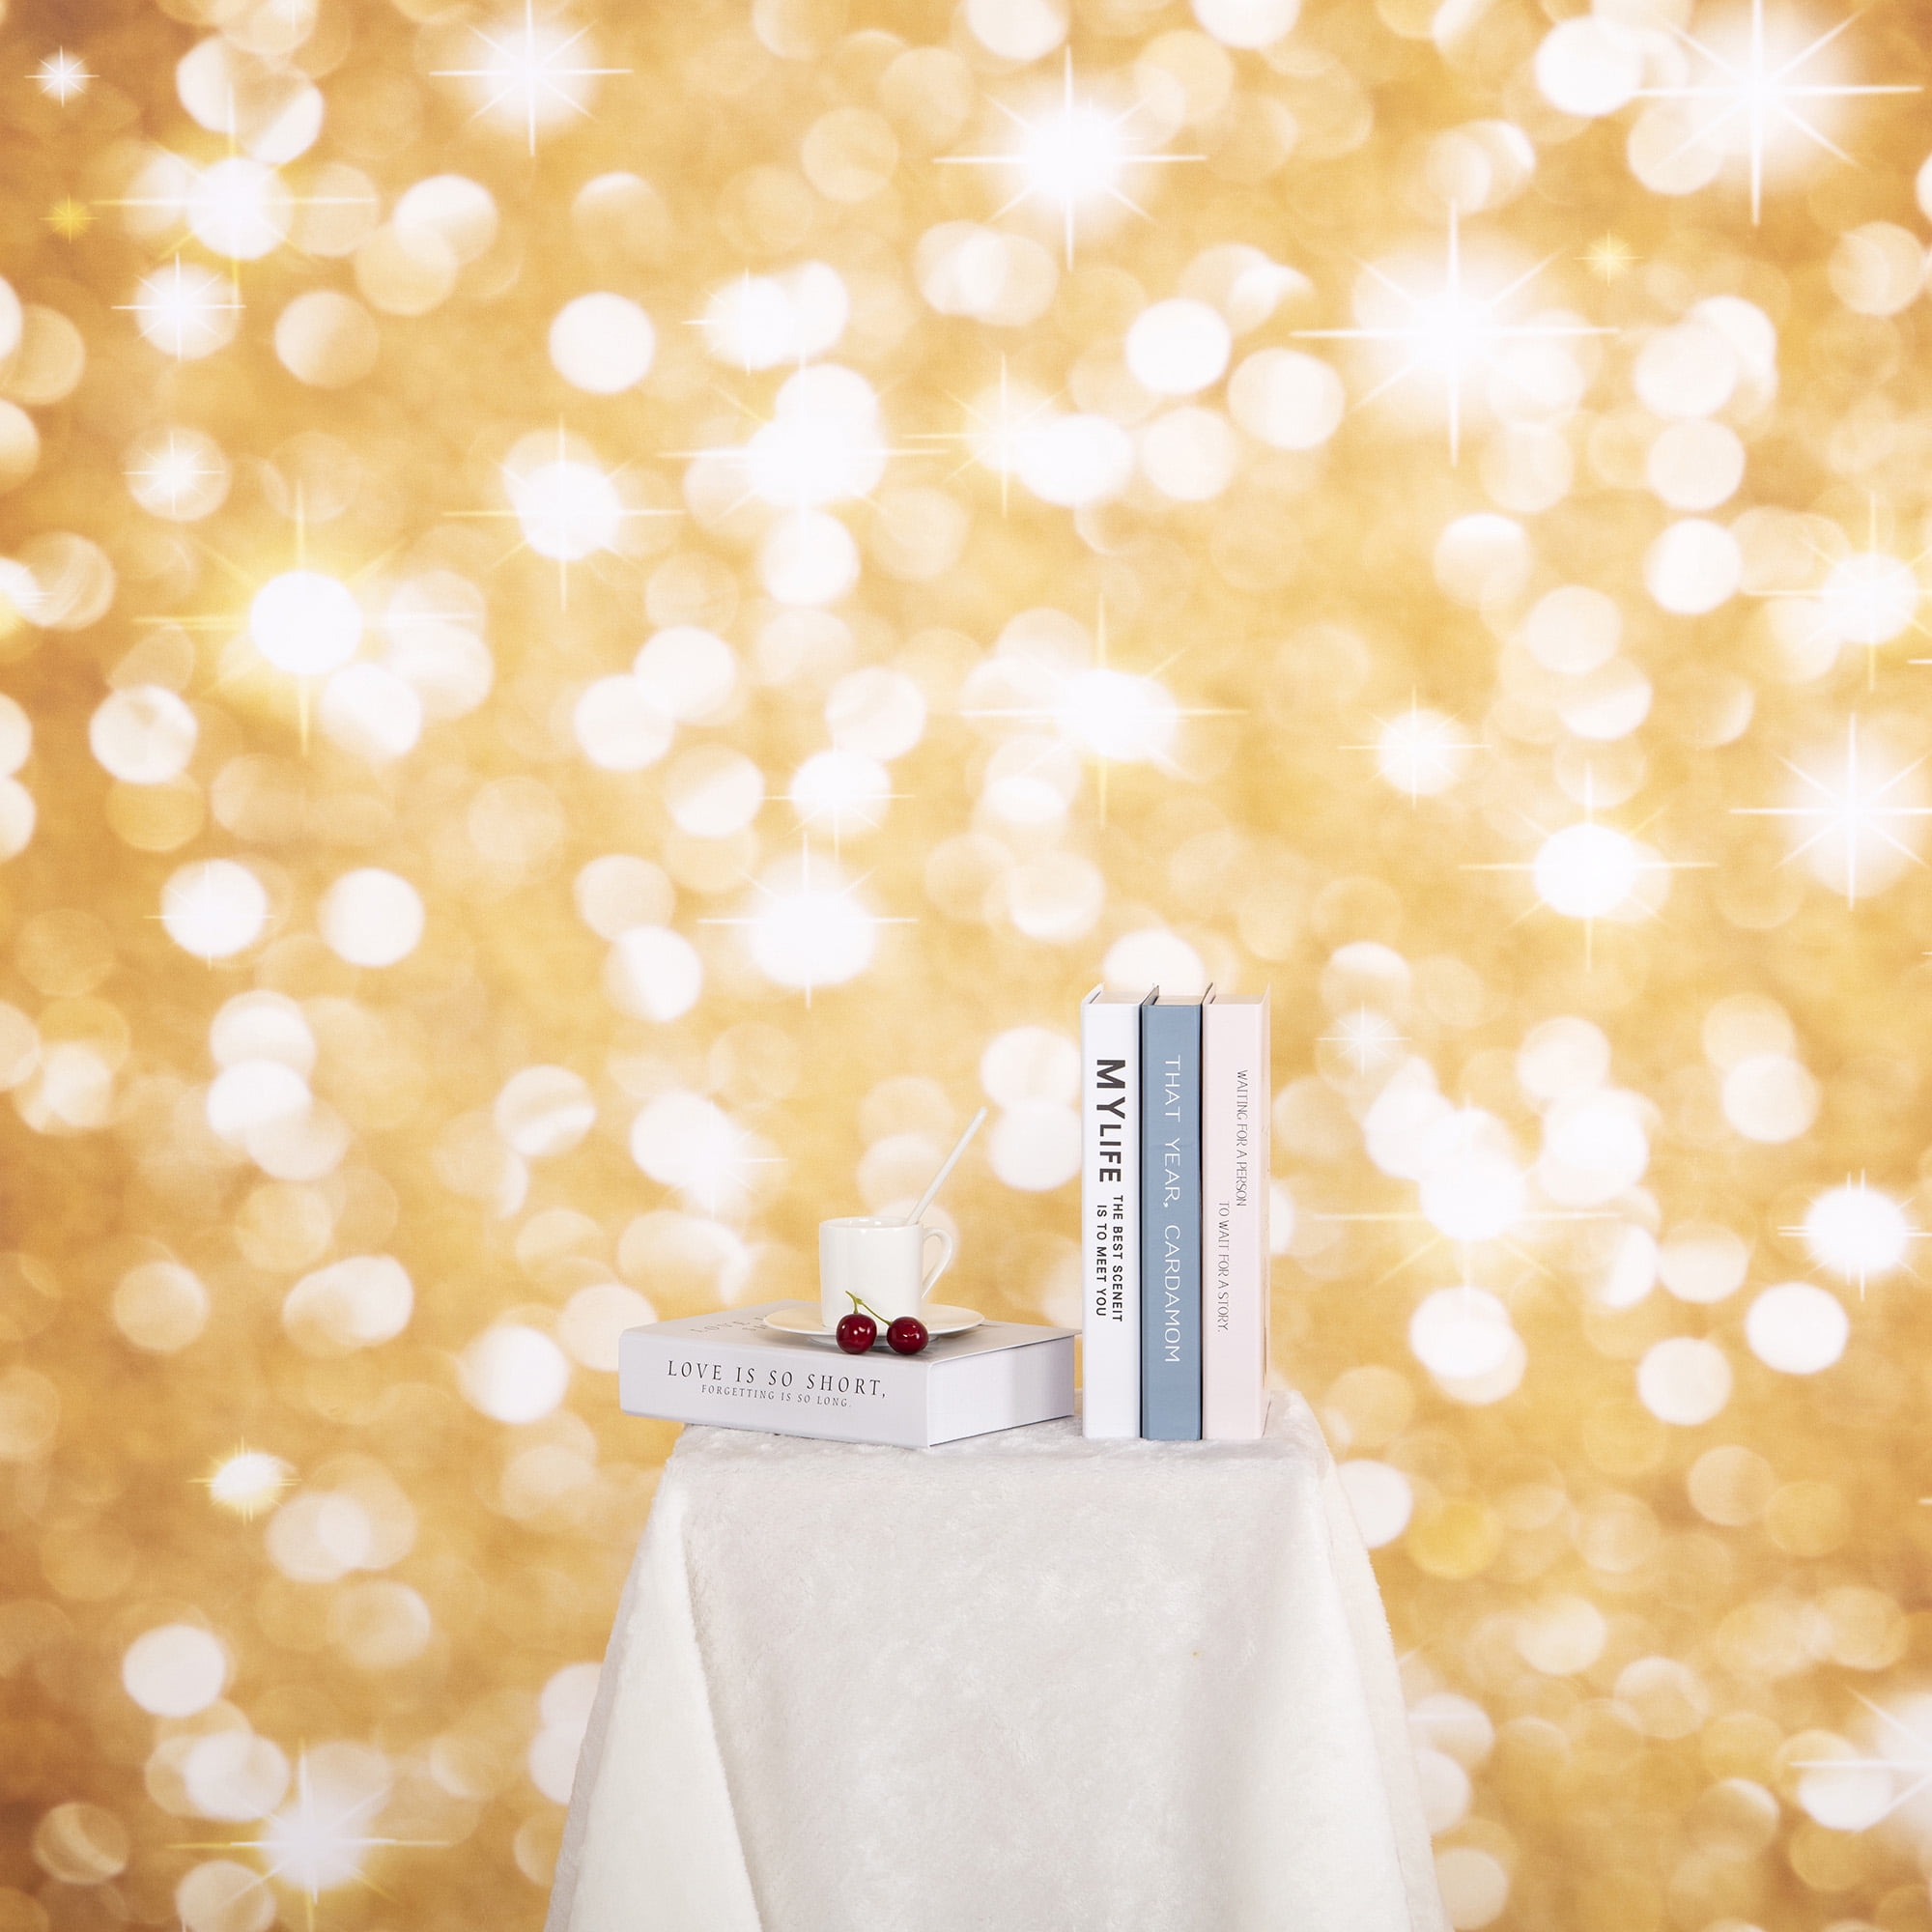 Gold Black Glitter Backdrop for Party Decor Photography LV-941 – Dbackdrop